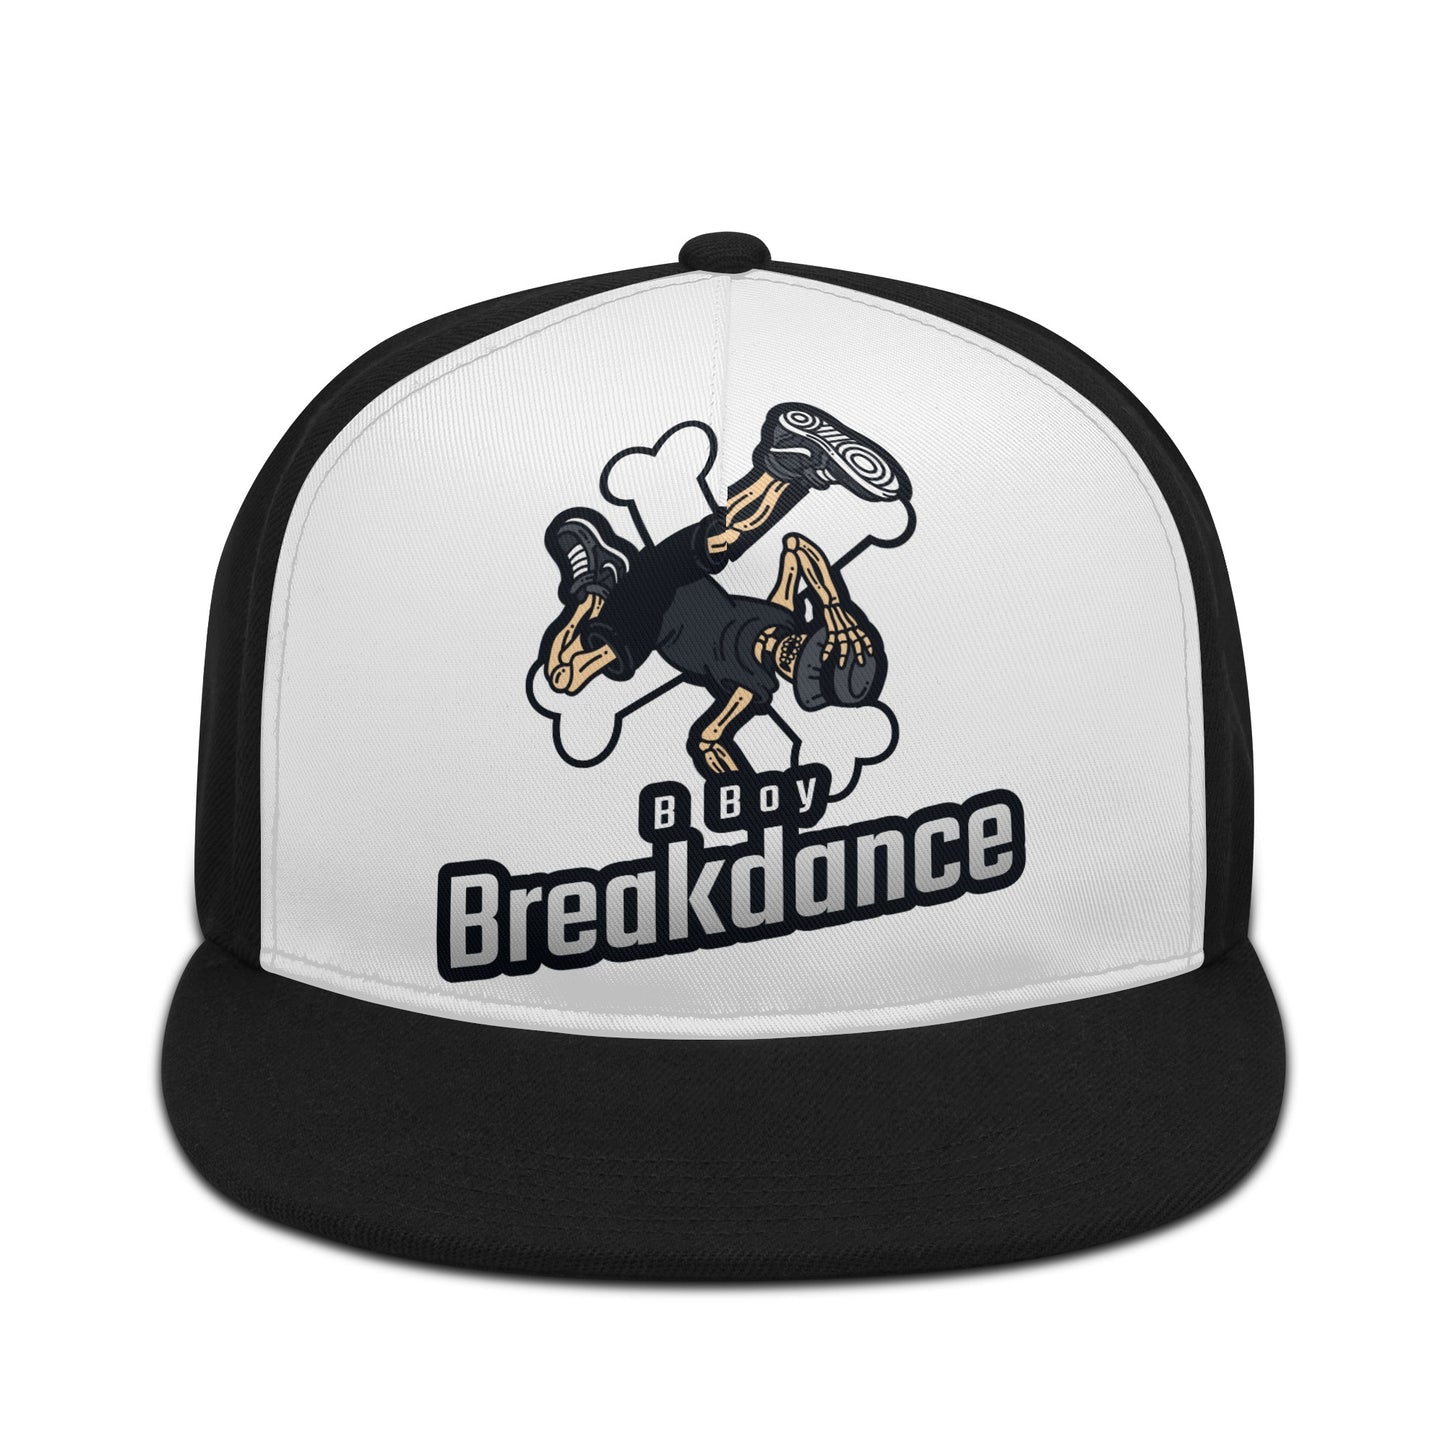 Hip-hop Hat Dress Hood Breakdance